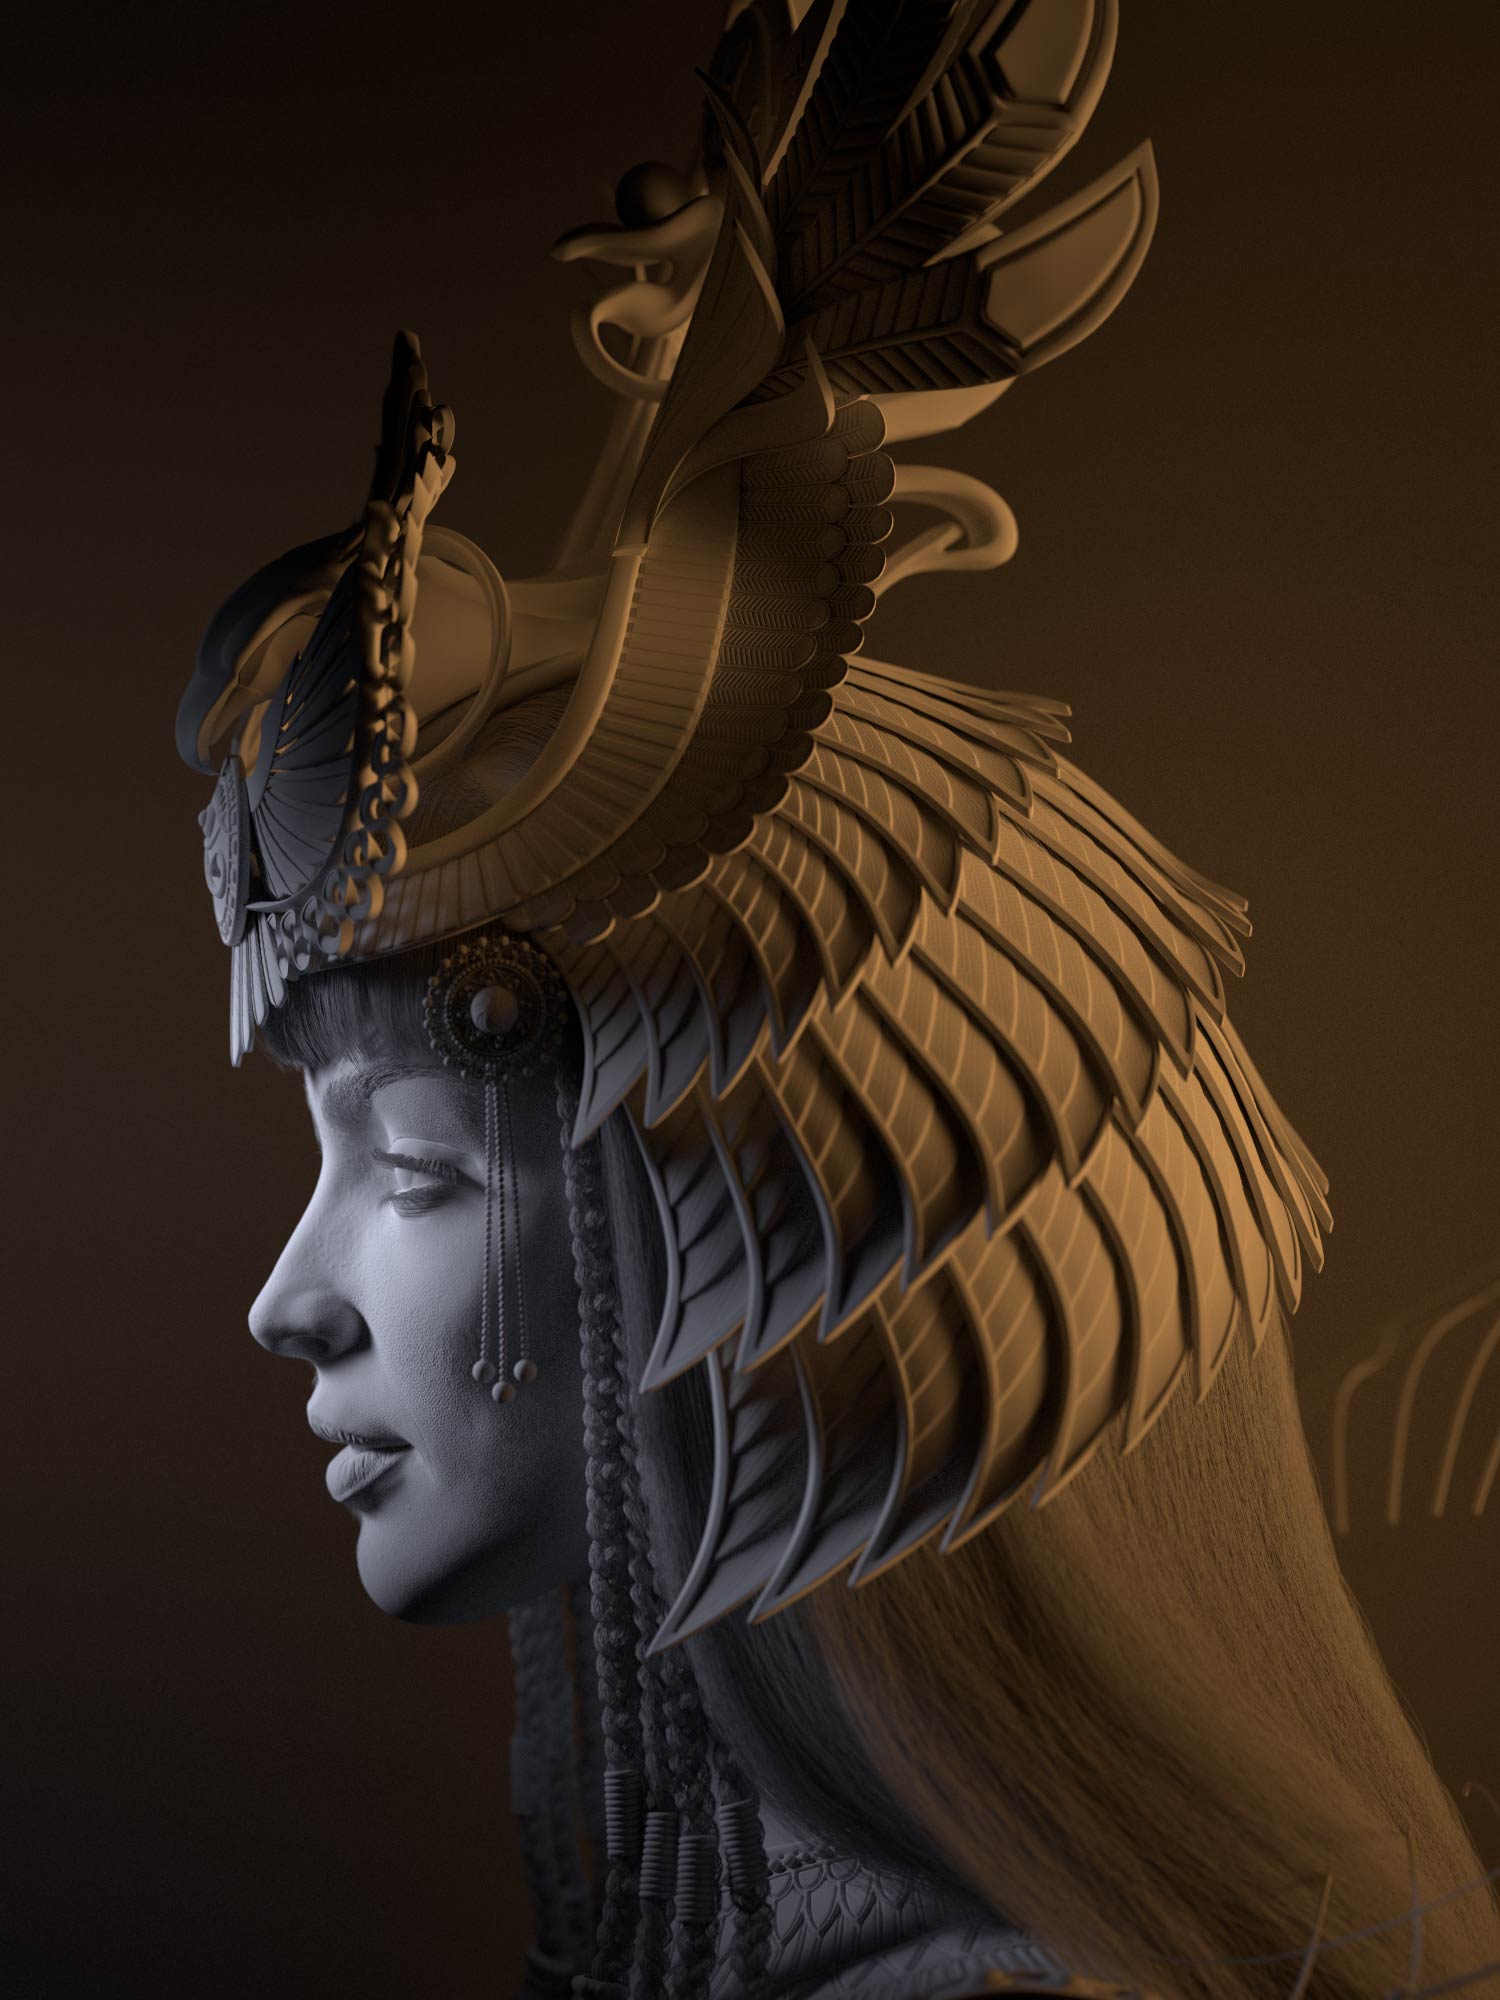 cleopatra_3d_lighting_side_view_digital_csulpting Cleopatra CG Character